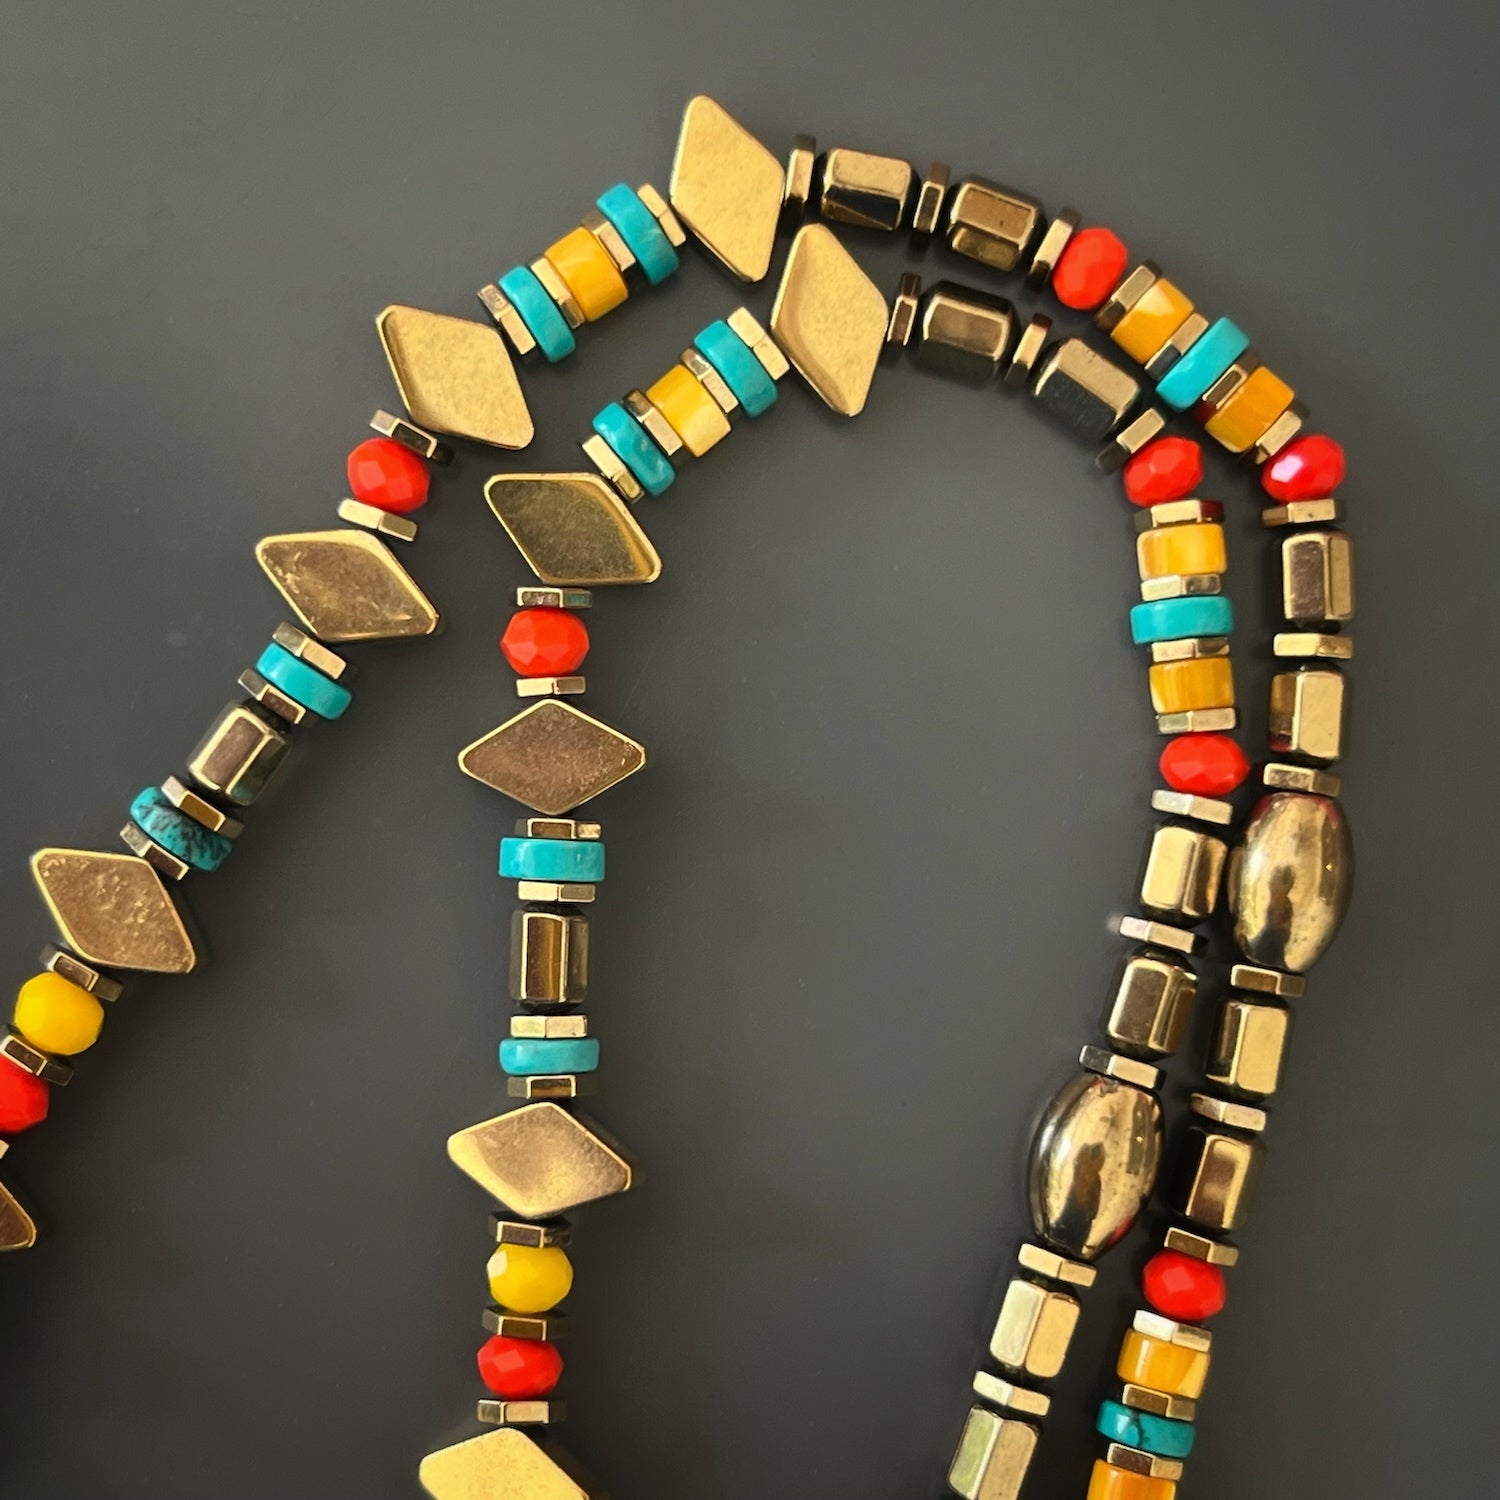 A close-up of the Joyful Heartbeat Necklace, showcasing its playful design and joyful vibe.